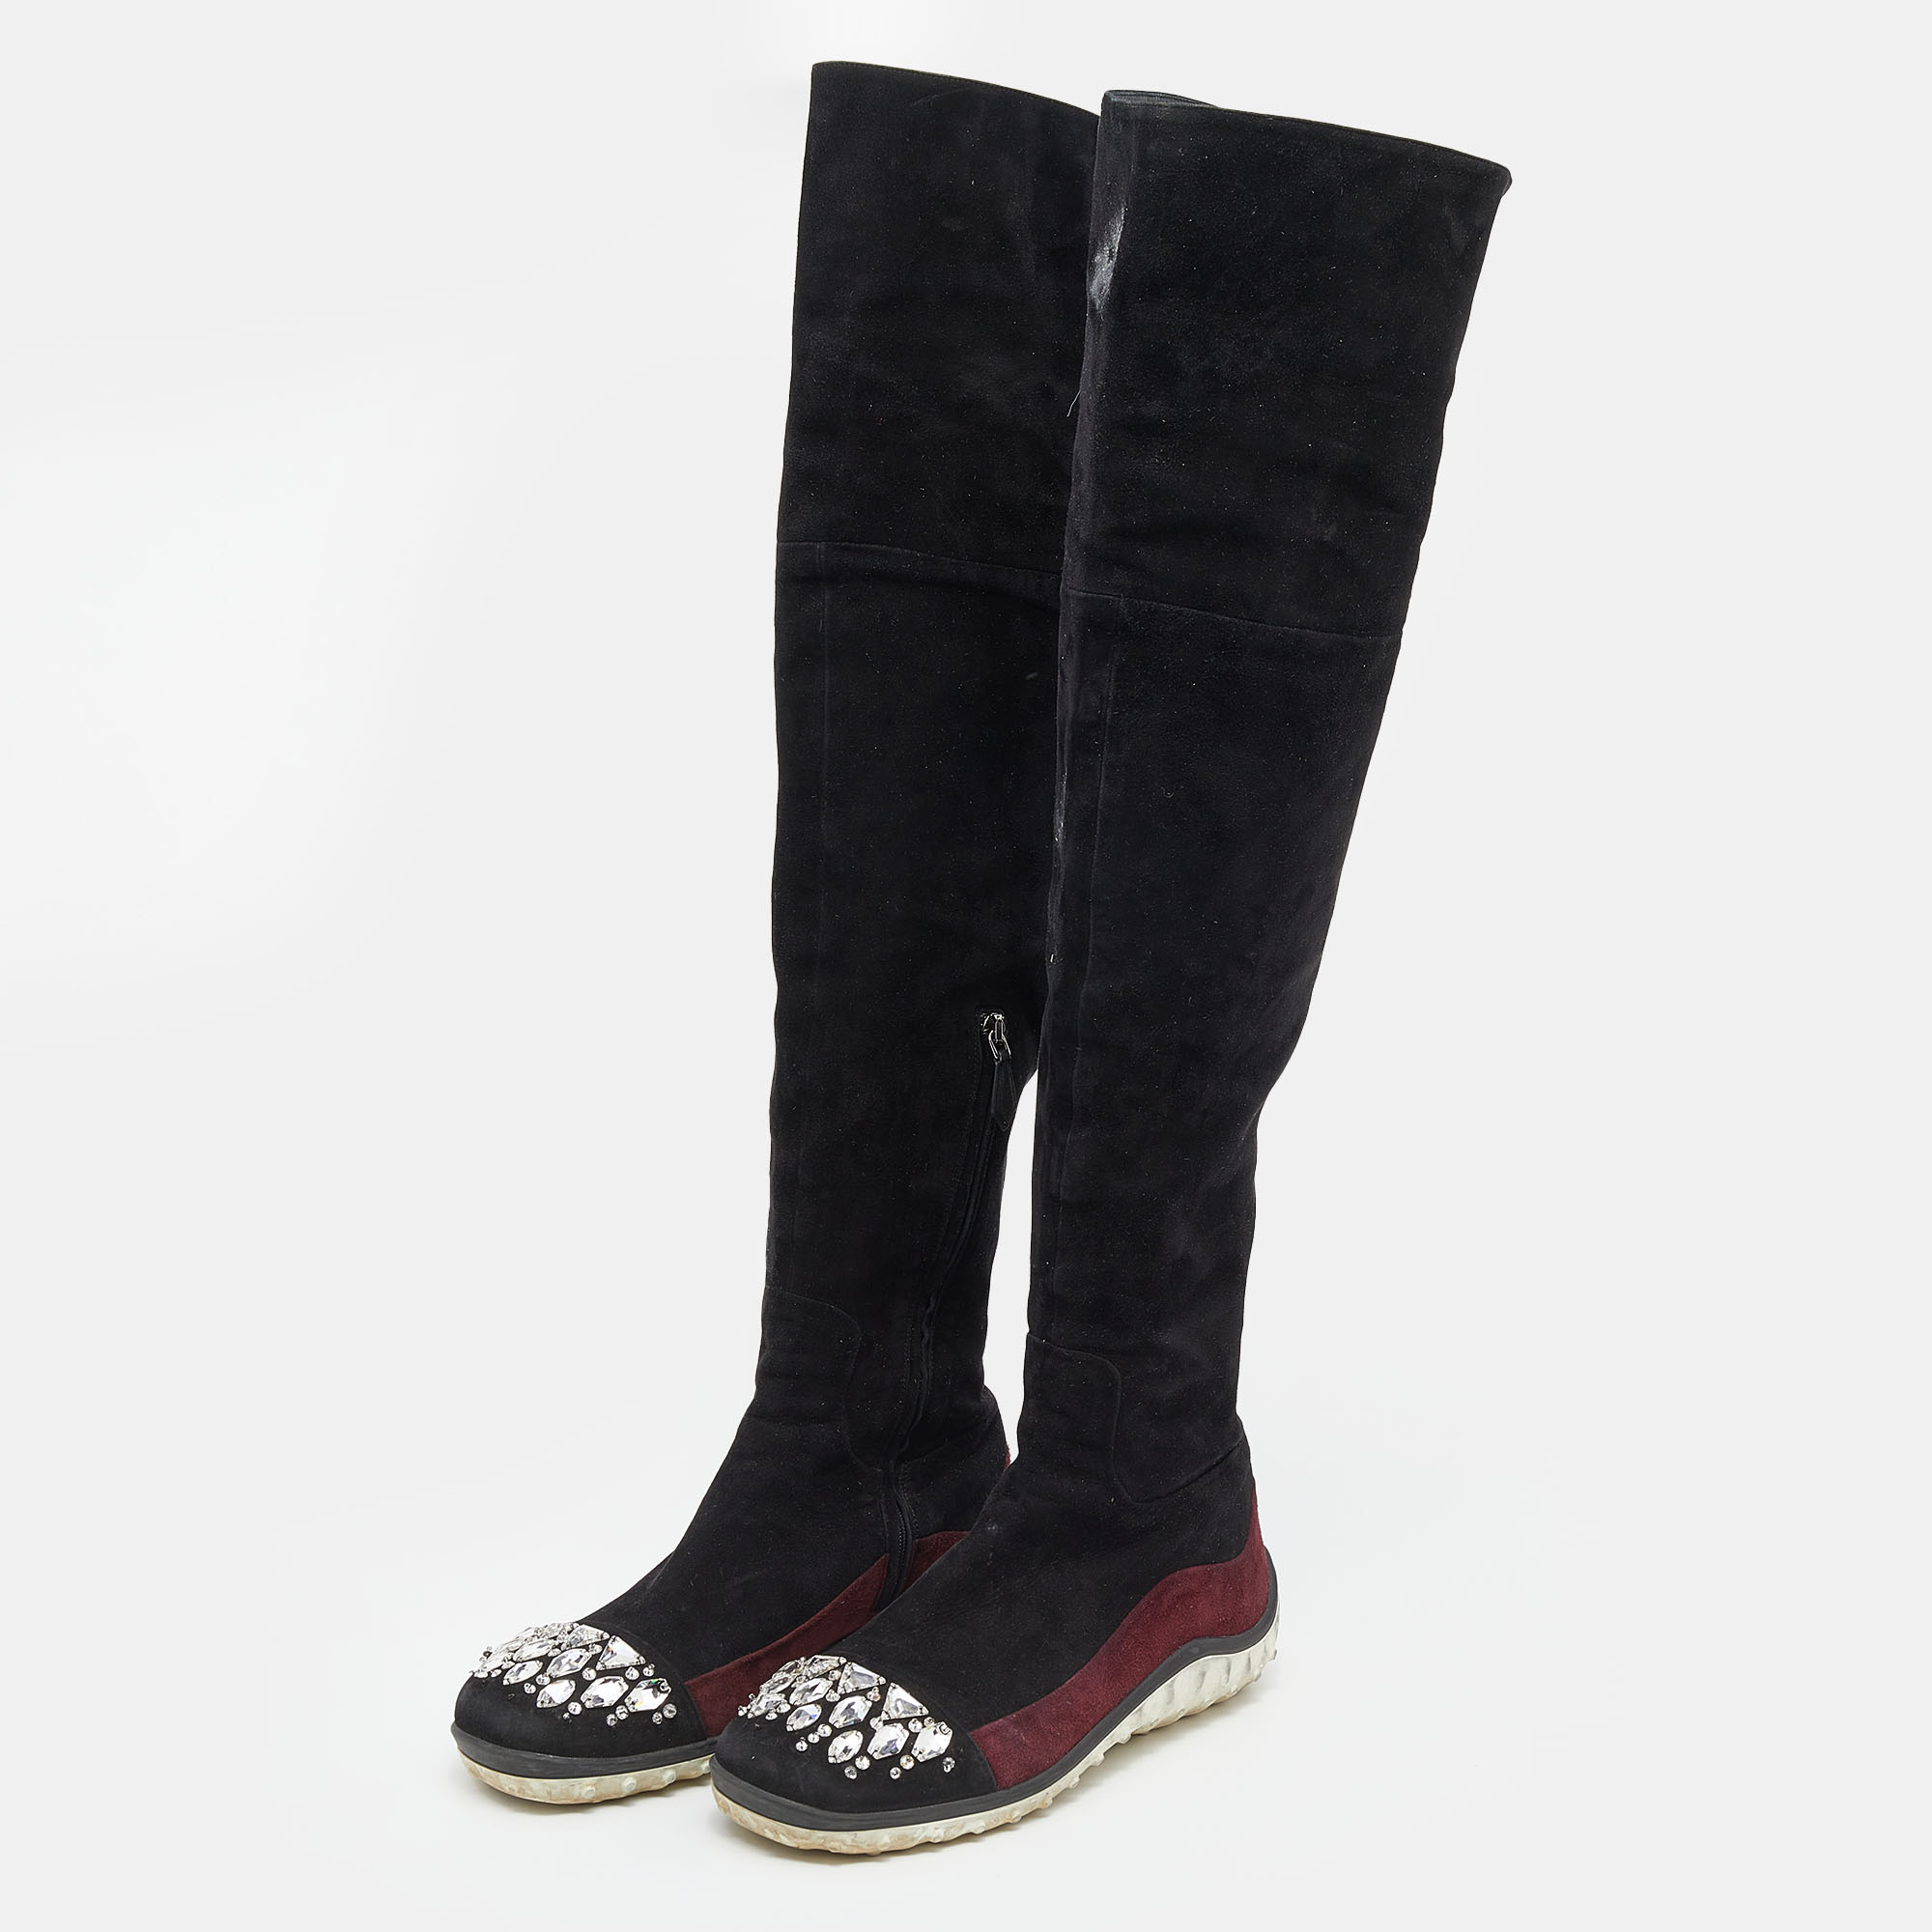 

Miu Miu Black/Burgundy Suede Crystal Embellished Over The Knee Boots Size